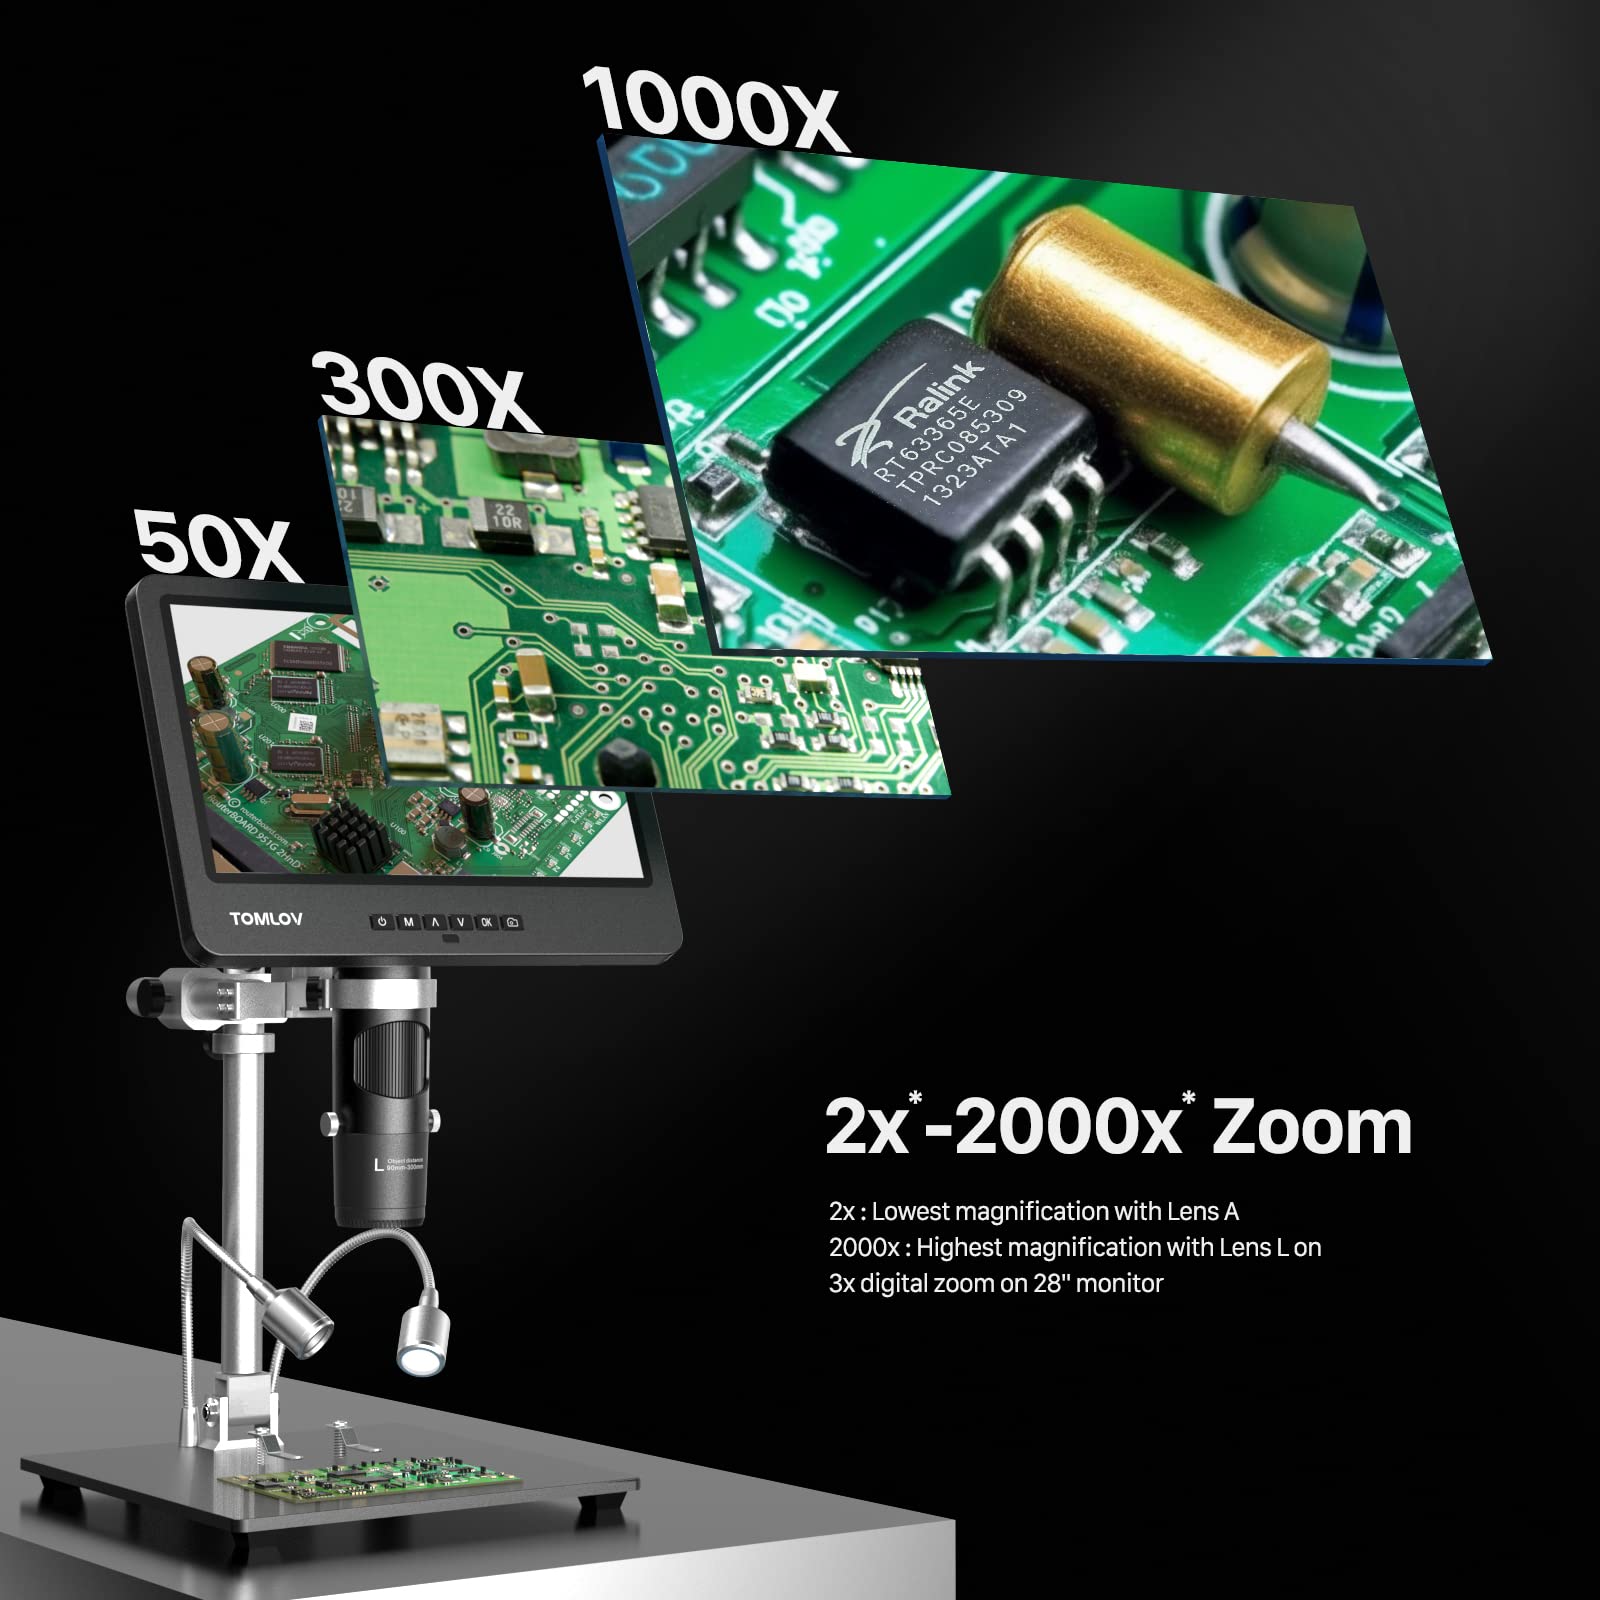 TOMLOV 10 HDMI Digital Microscope with Polarizer lens Coin Microscope Full  View